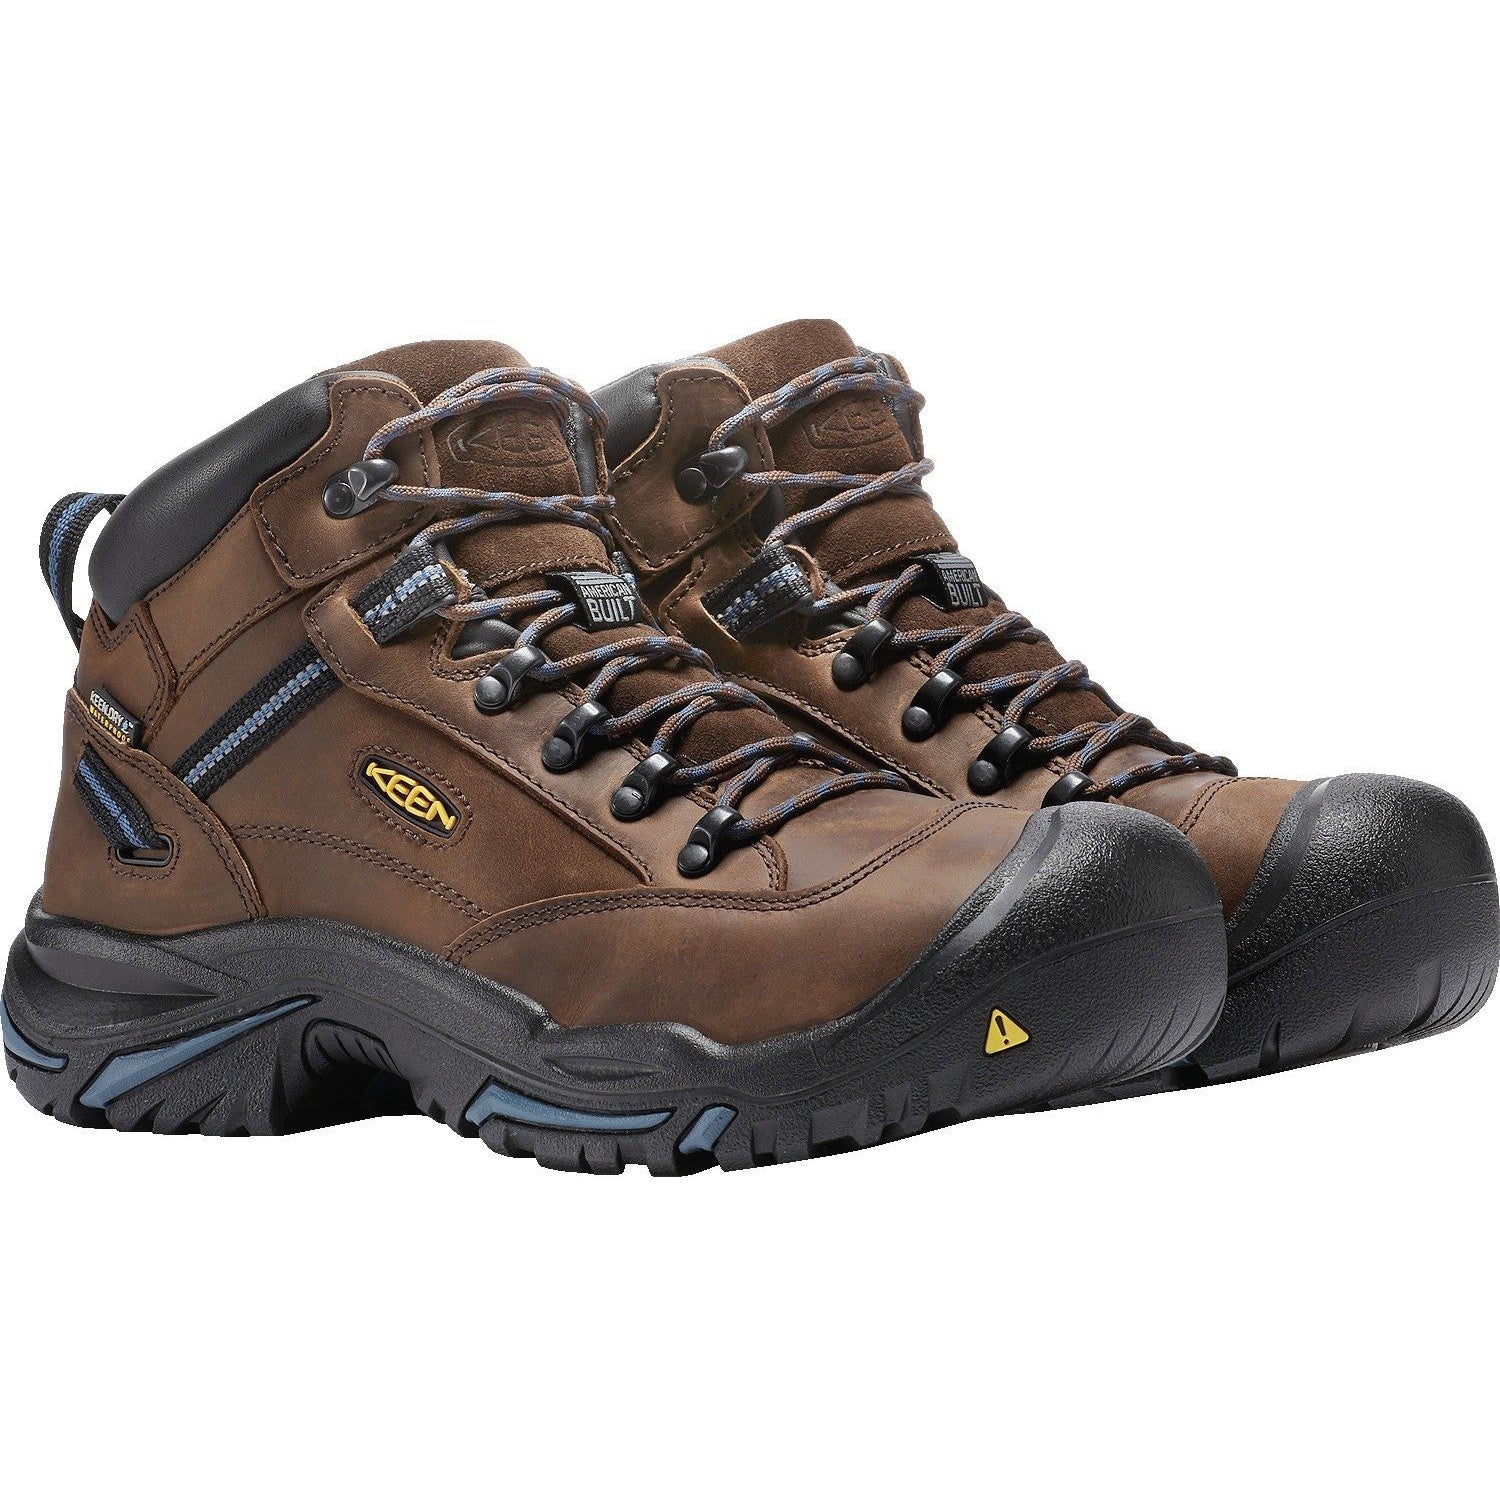 Keen Utility Men's Braddock USA Built Stl Toe WP Work Boot Brown 1012771 8 / Medium / Brown - Overlook Boots